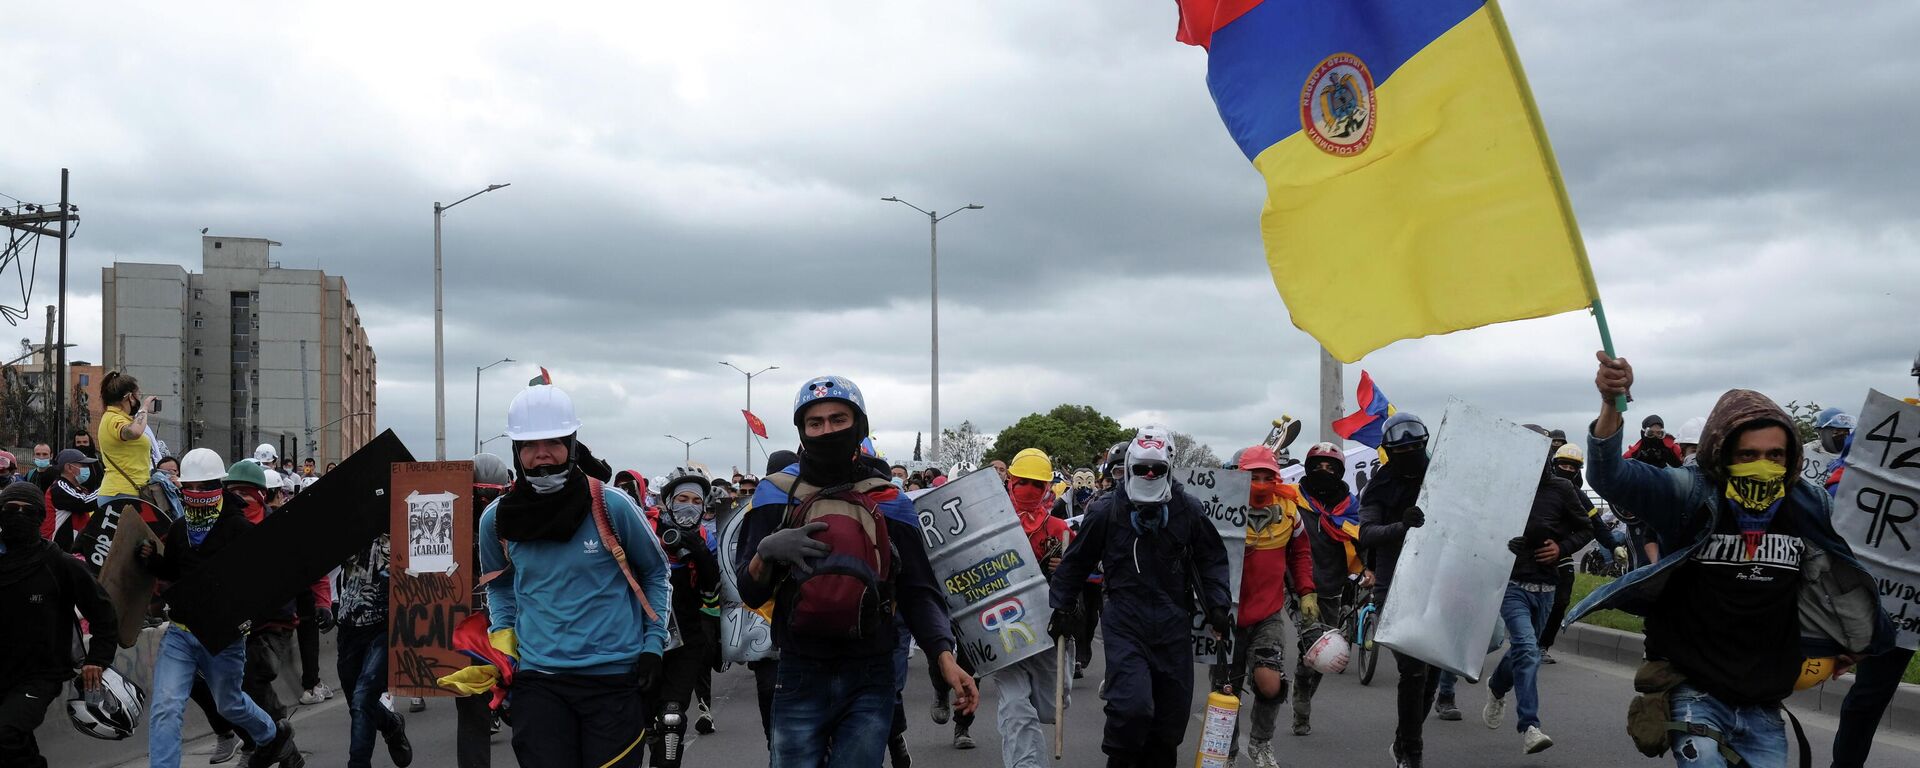 Protestas en Colombia - Sputnik Mundo, 1920, 03.08.2021